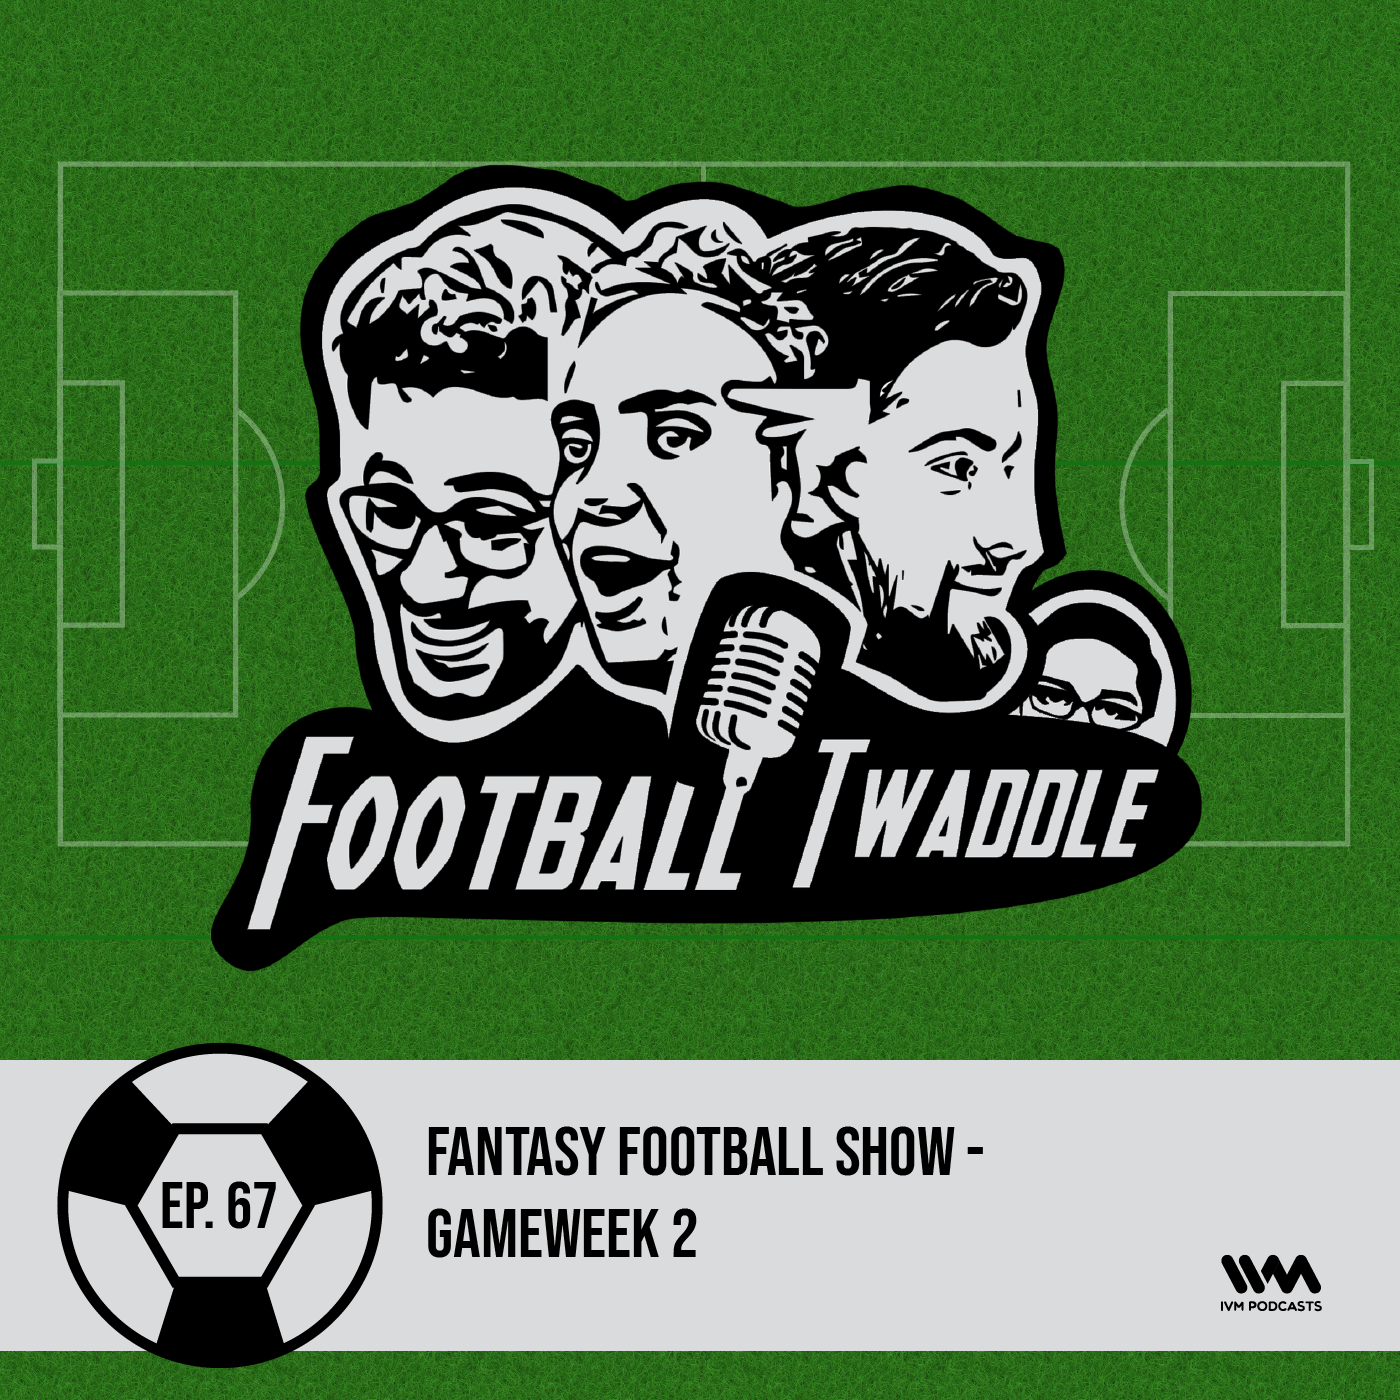 Fantasy Football Show - Gameweek 2